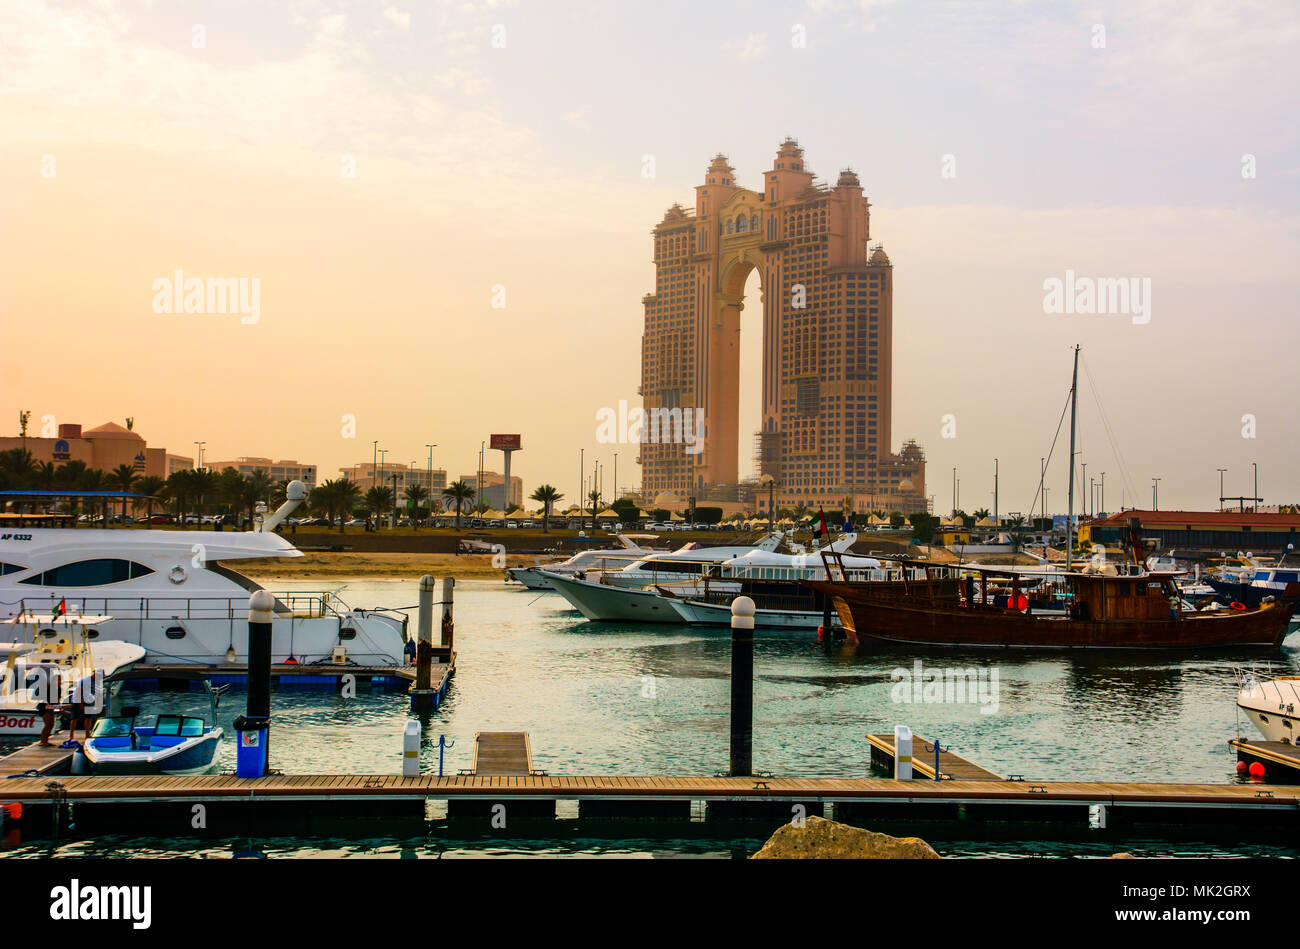 Abu Dhabi, UAE - April 27, 2018: Sunset over Al Marina island in Abu dhabi with Atlantis hotel and yachts view Stock Photo